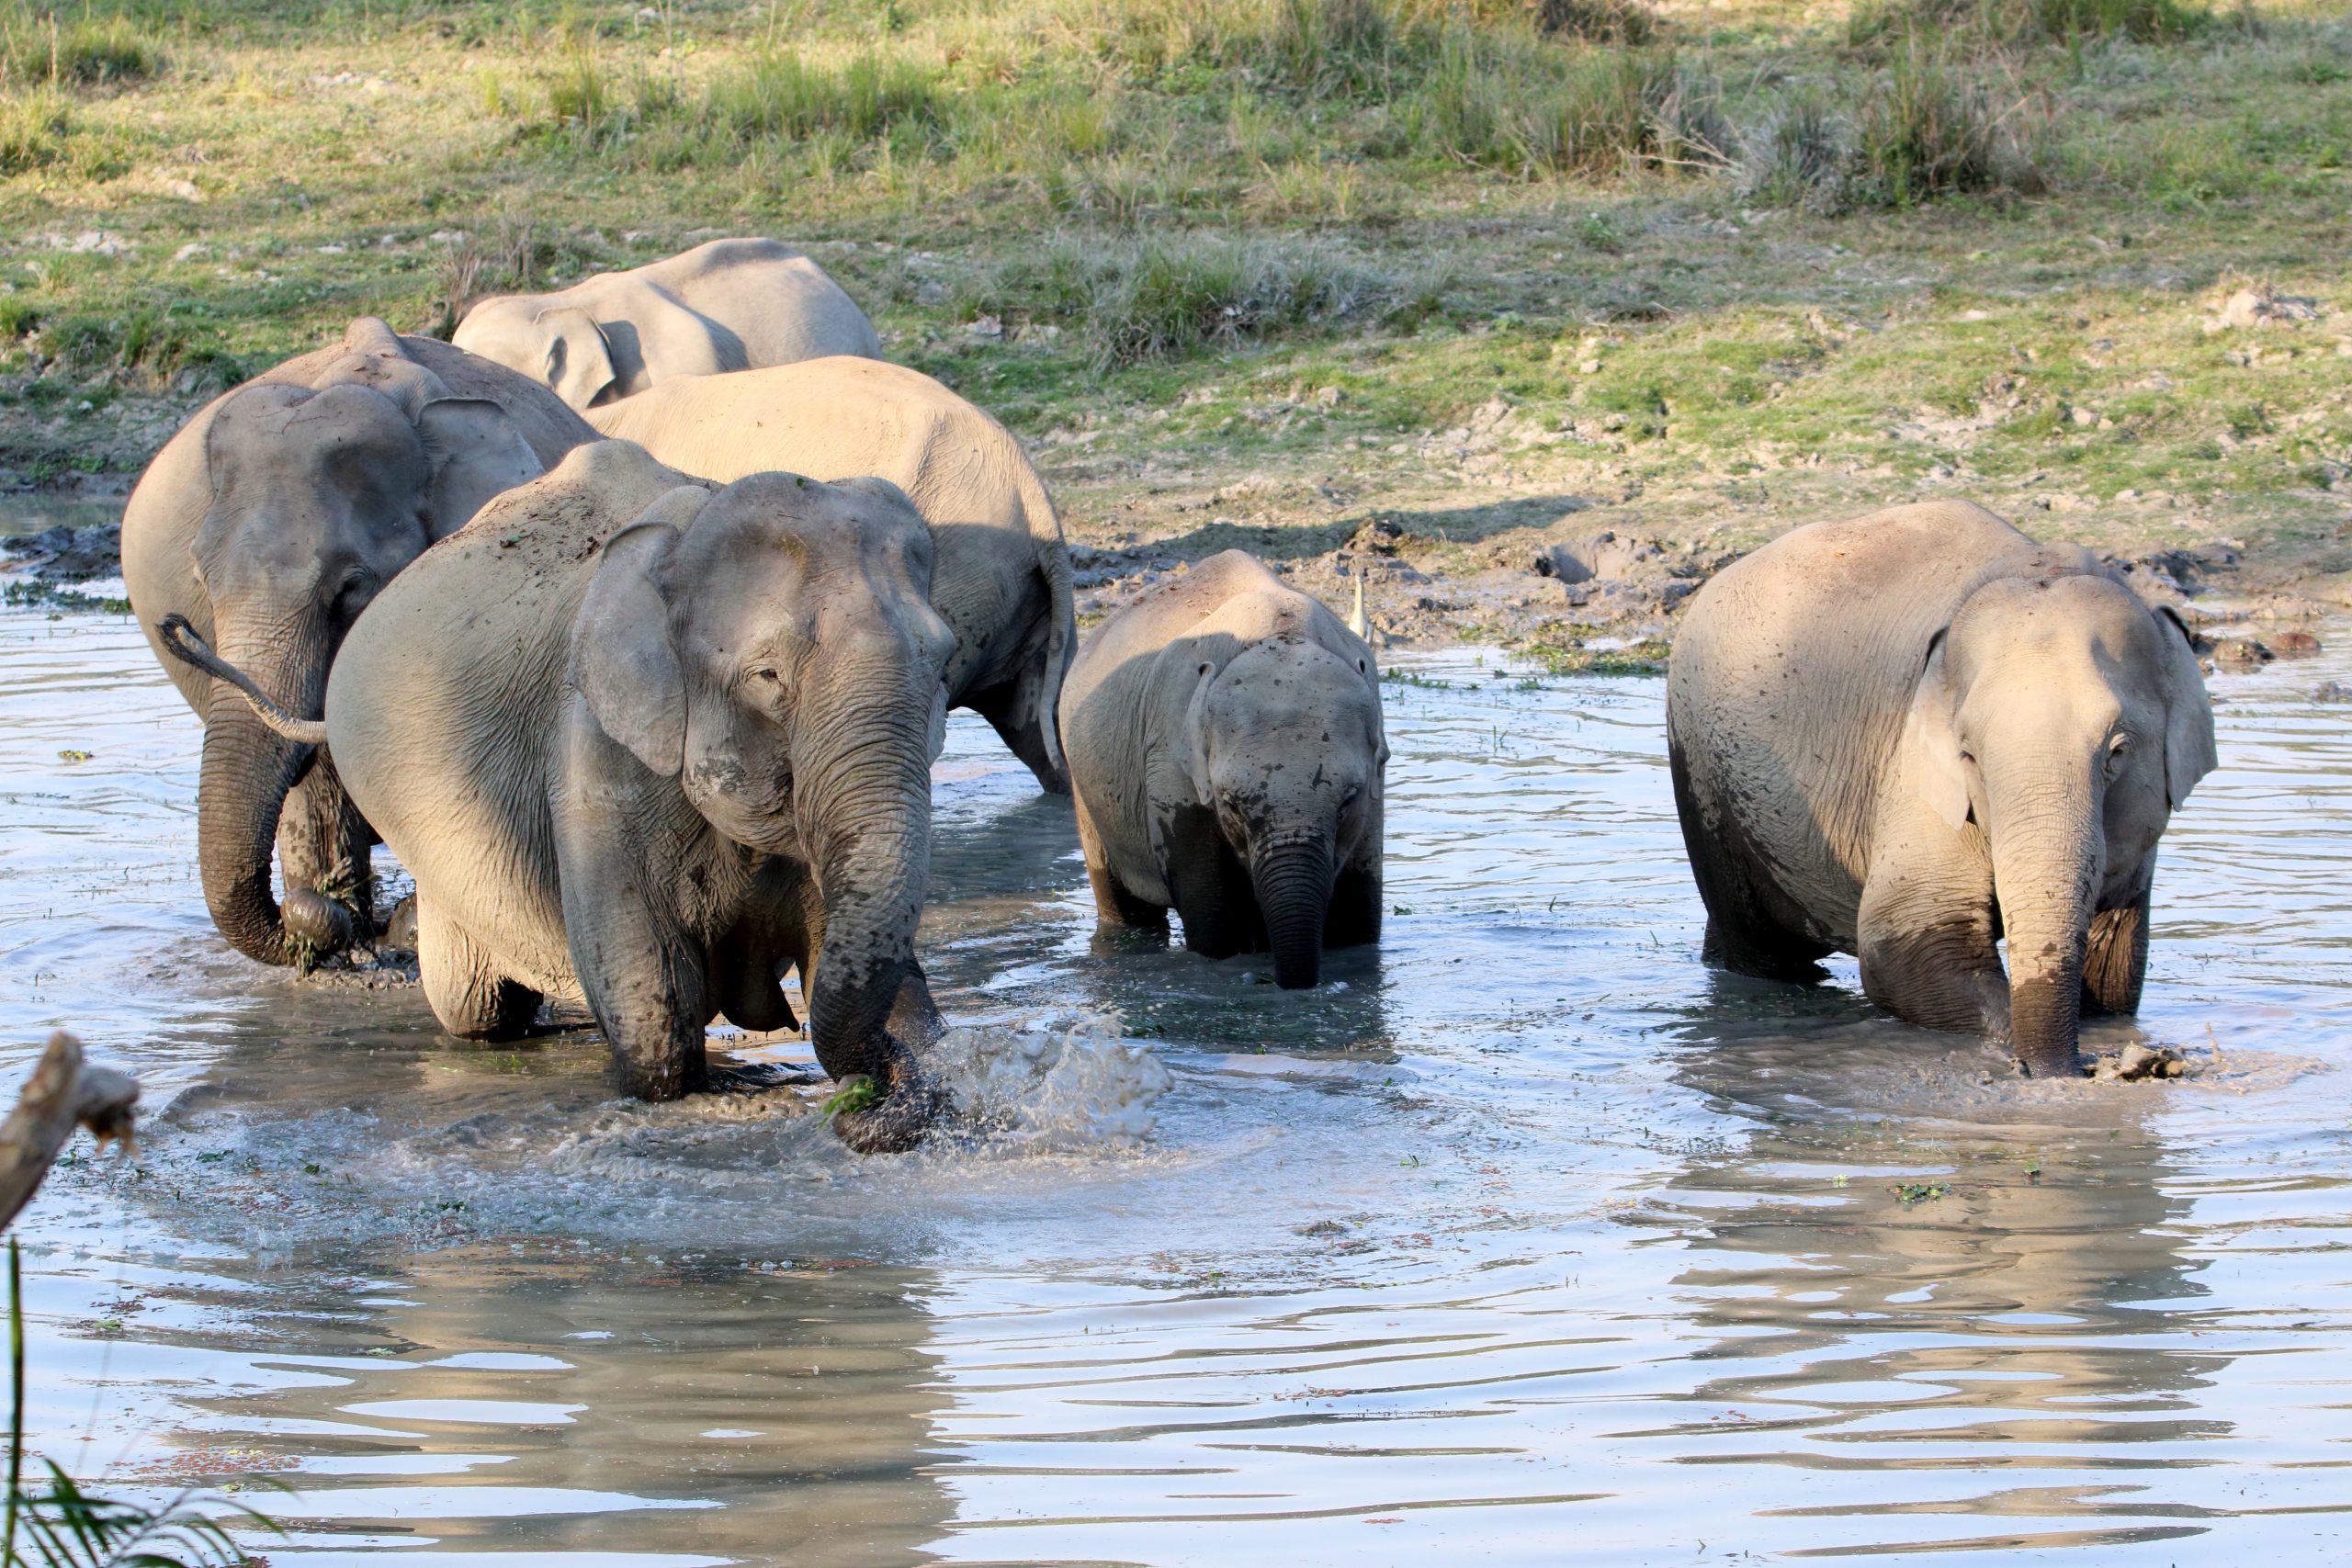 A herd of elephants in a river